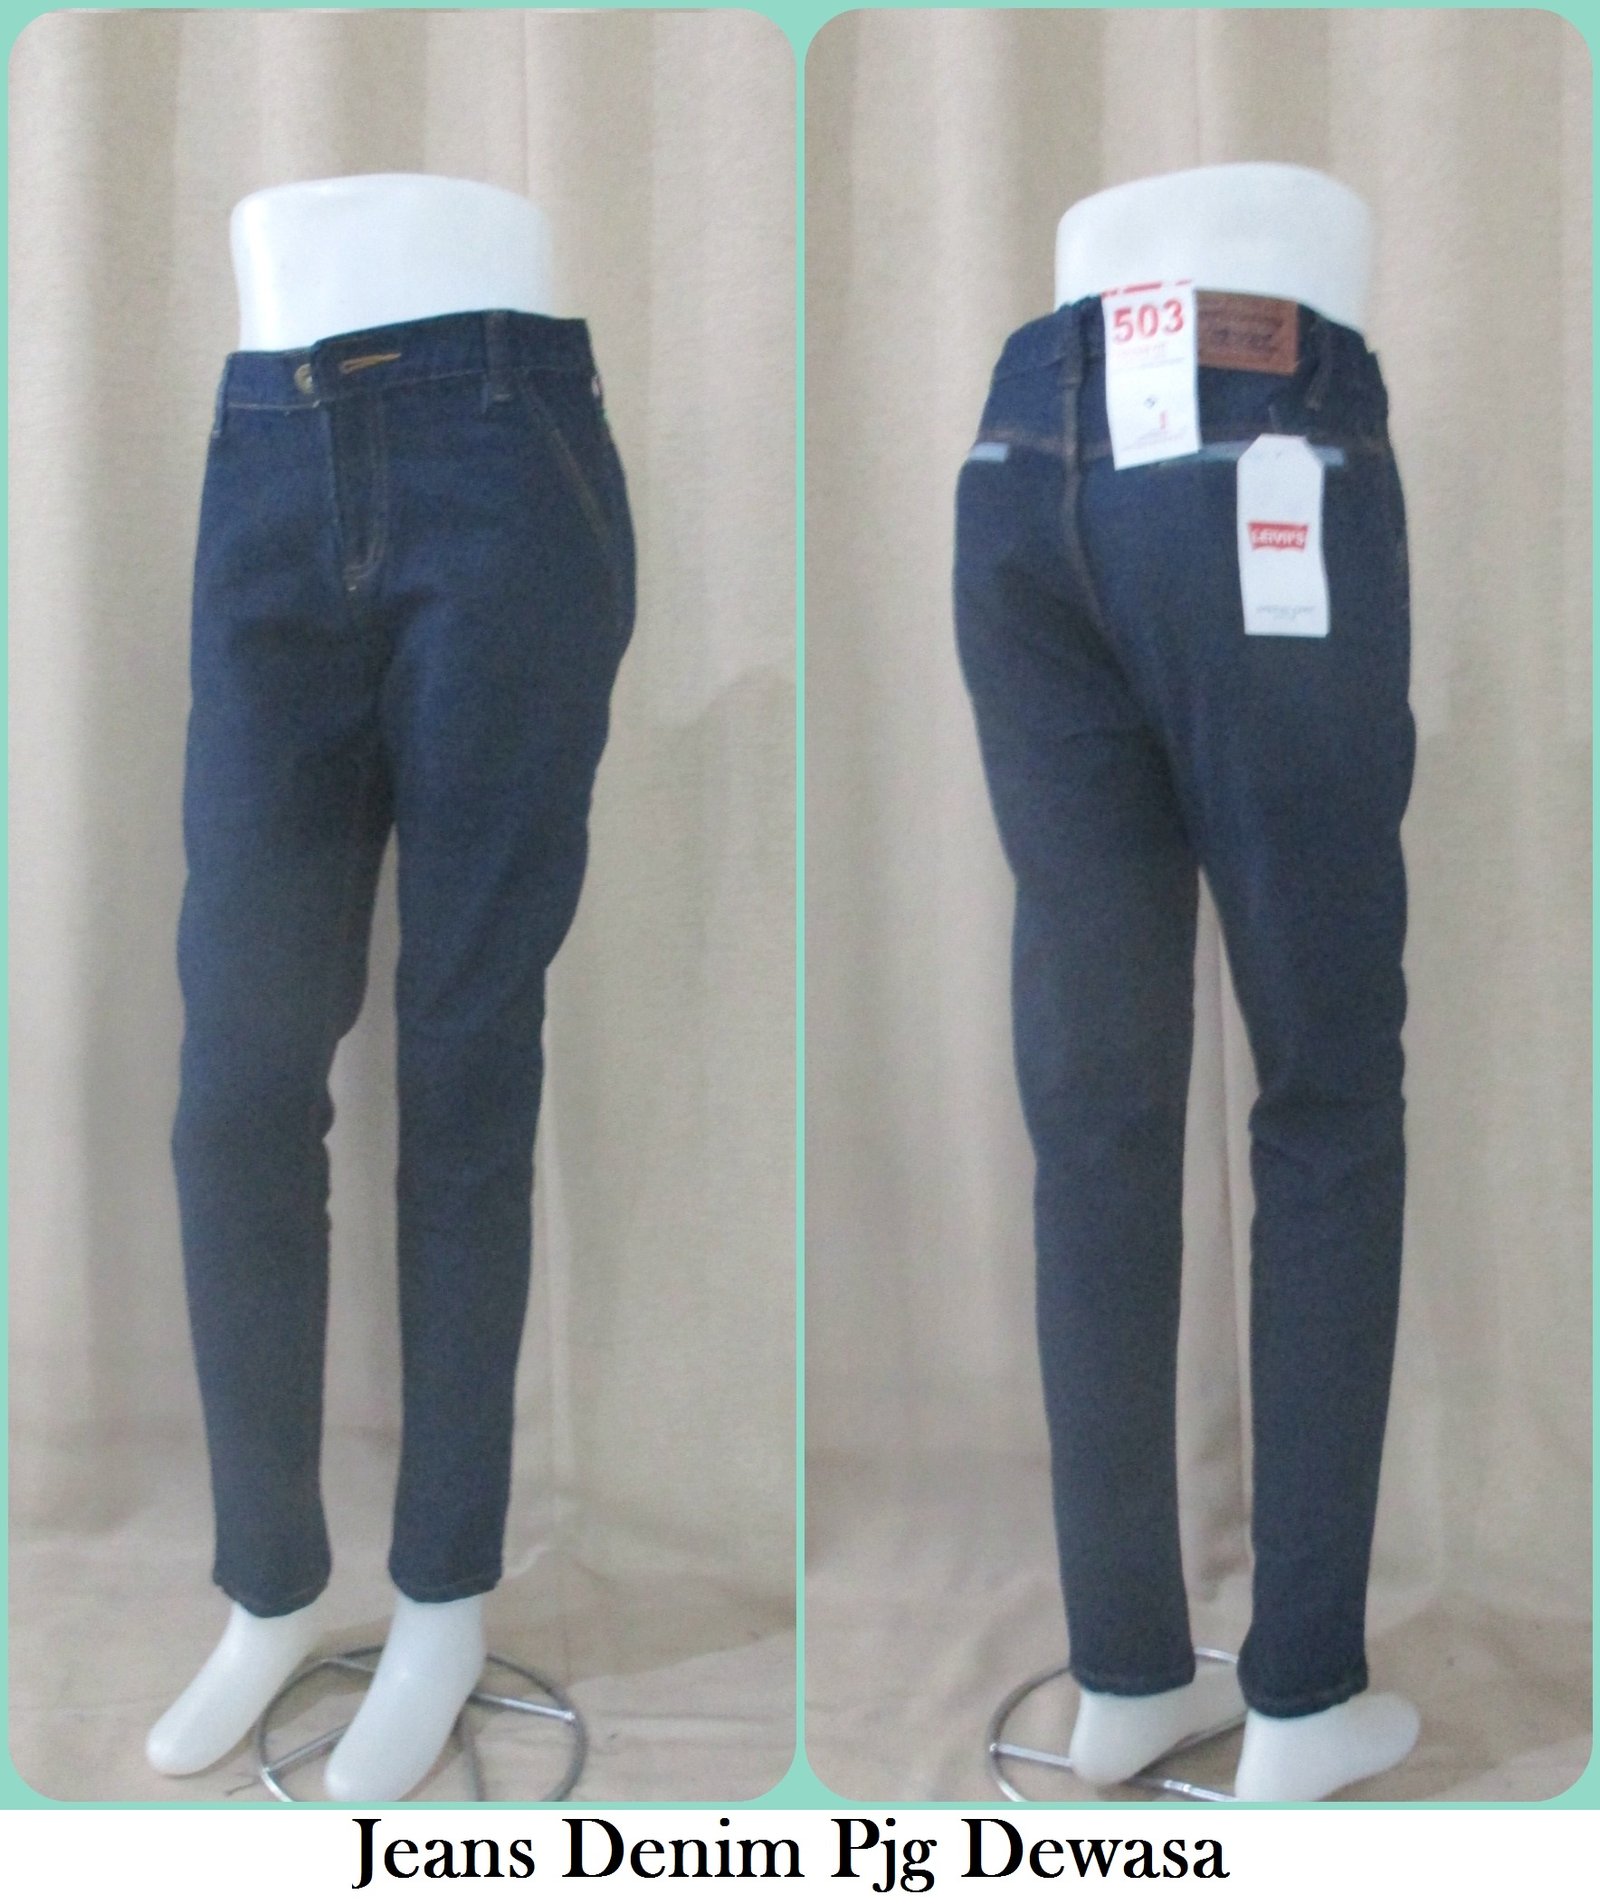 Grosiran Celana Jeans Denim Pjg Dewasa Branded Murah 60Ribu